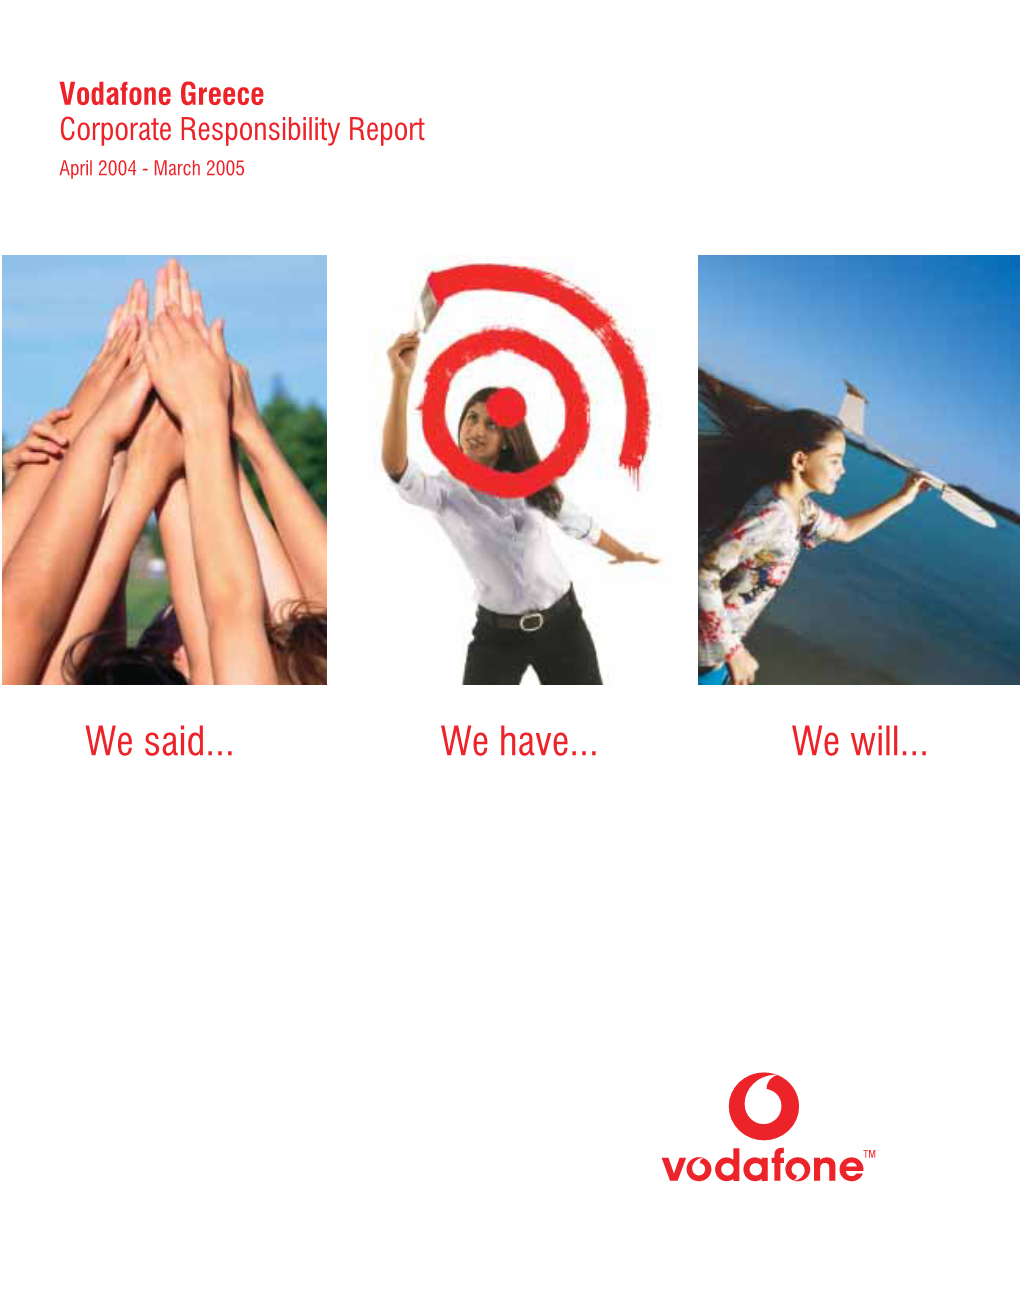 Vodafone Greece Corporate Responsibility Report April 2004 - March 2005